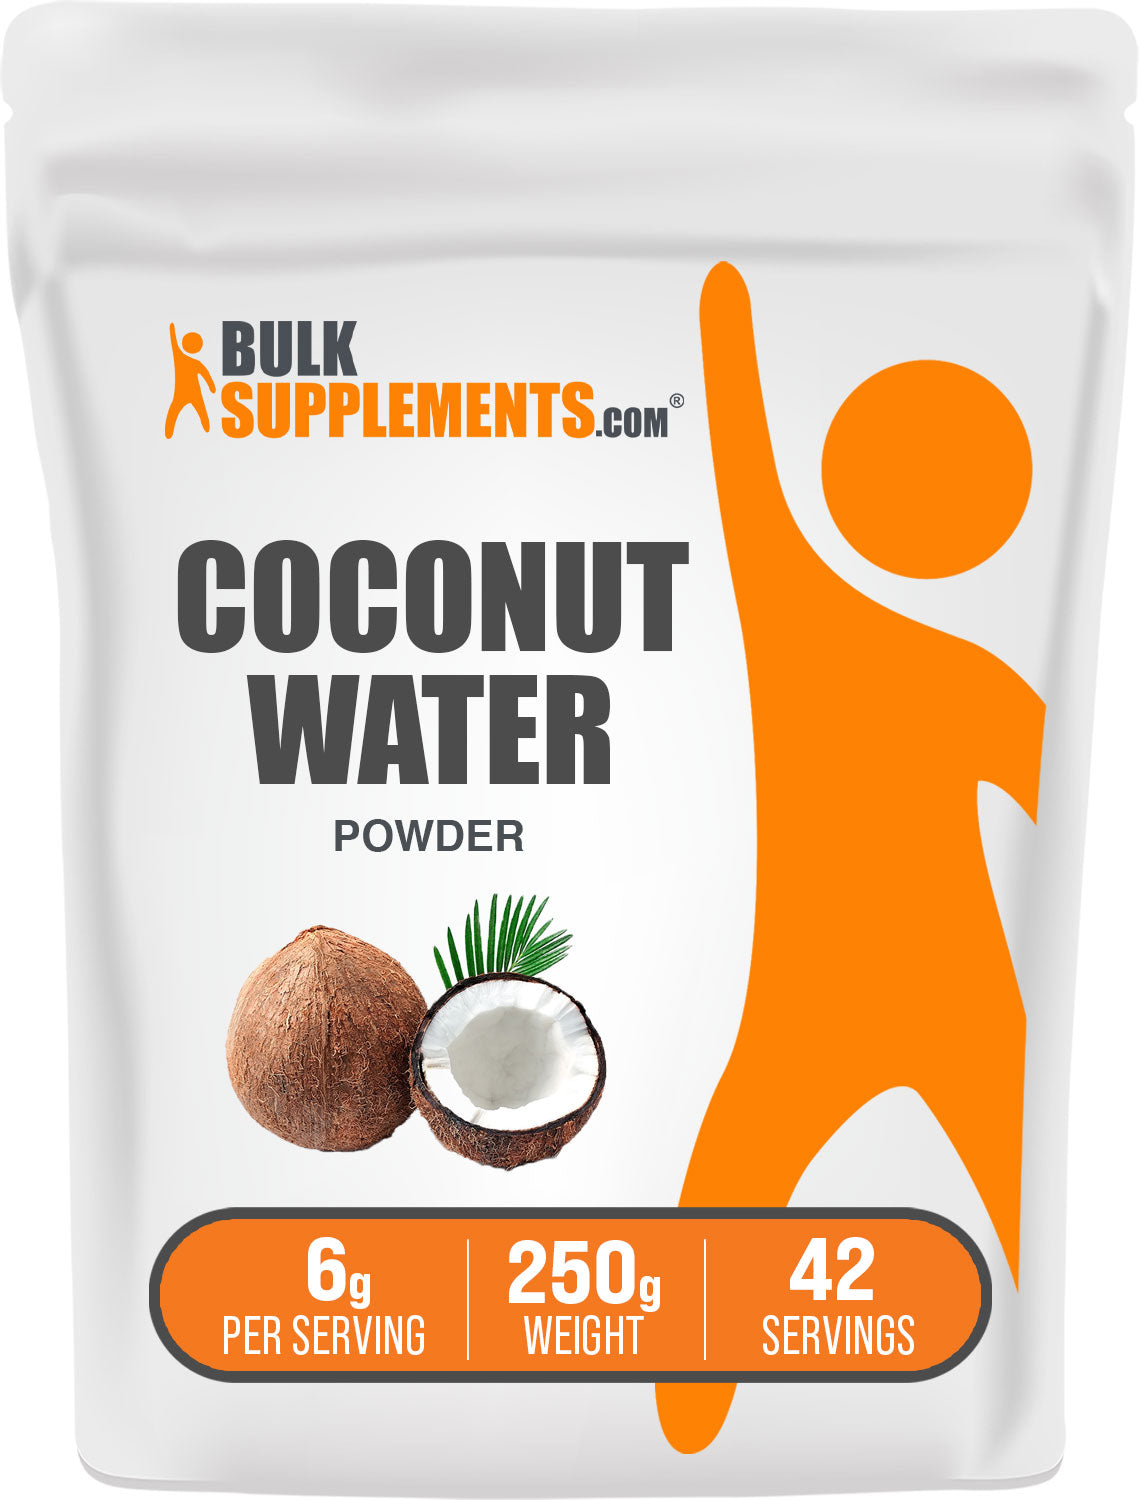 250g bag of Coconut Powder